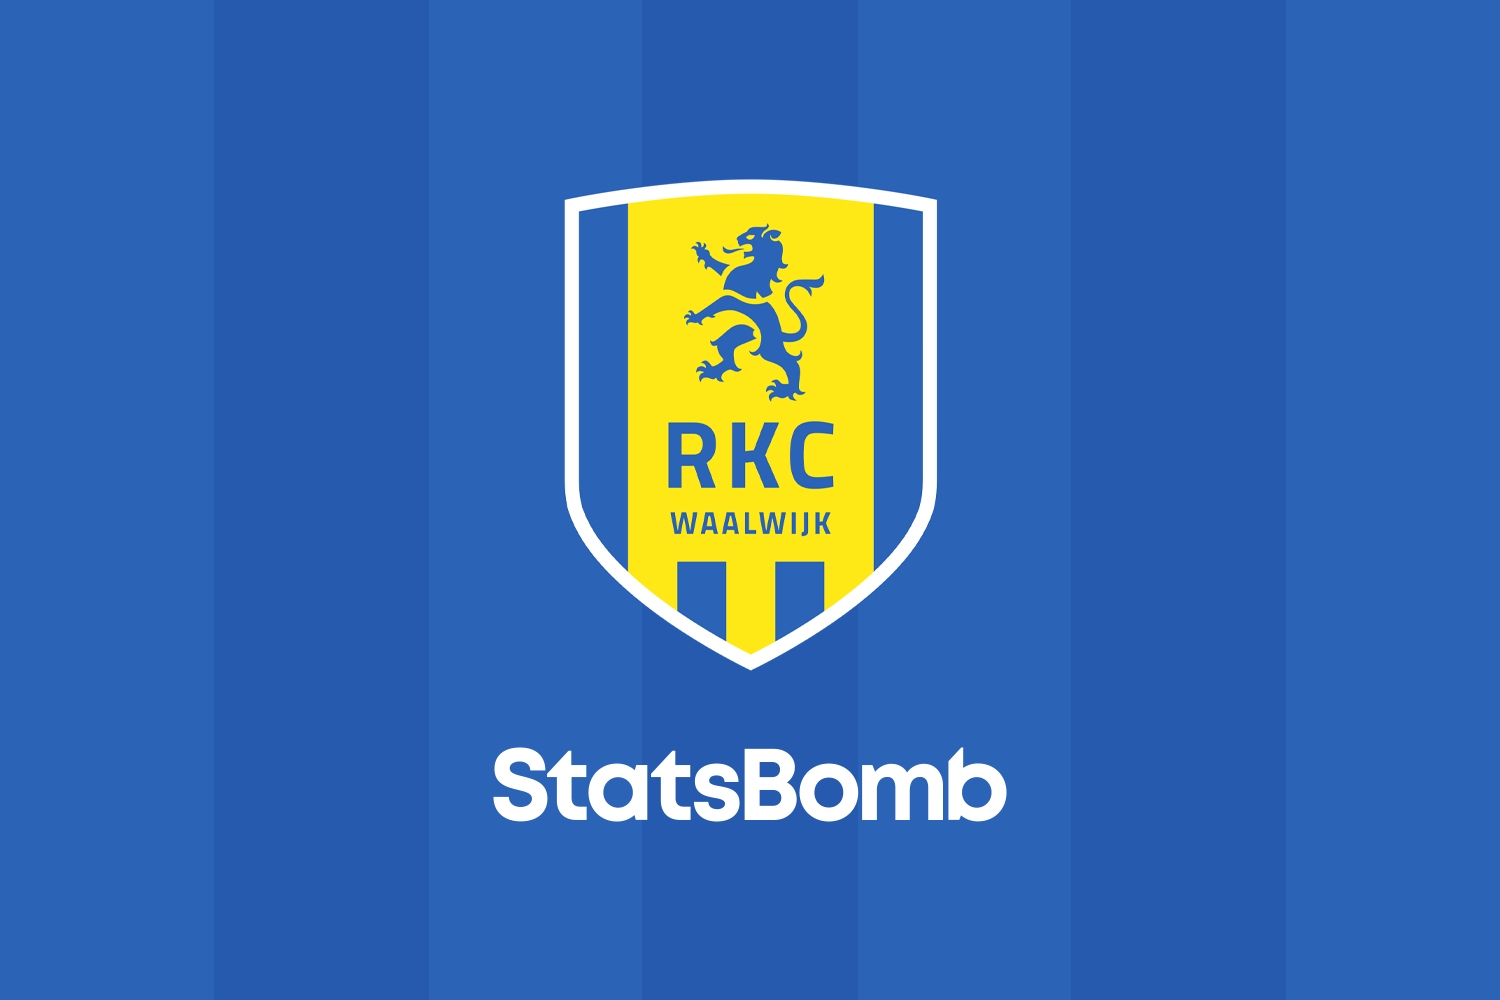 StatsBomb Sign Renewed Partnership With RKC Waalwijk